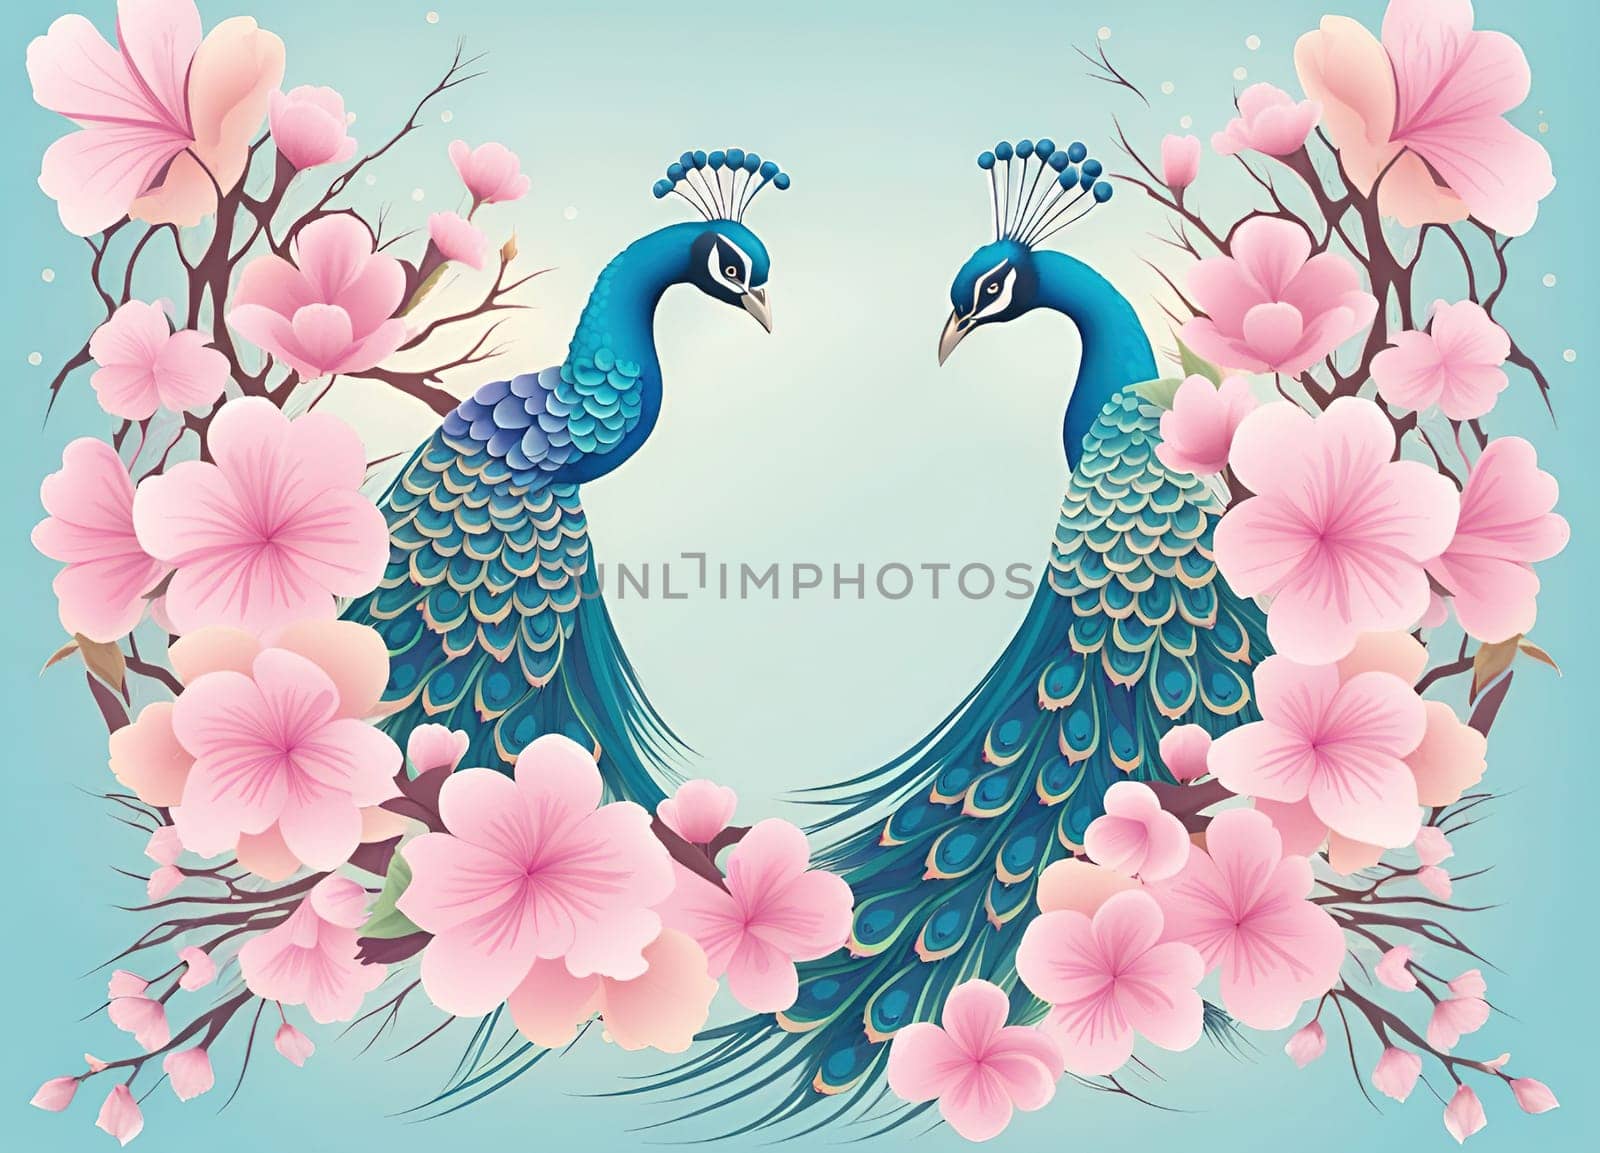 Peacock and cherry blossom background vector illustration. by yilmazsavaskandag